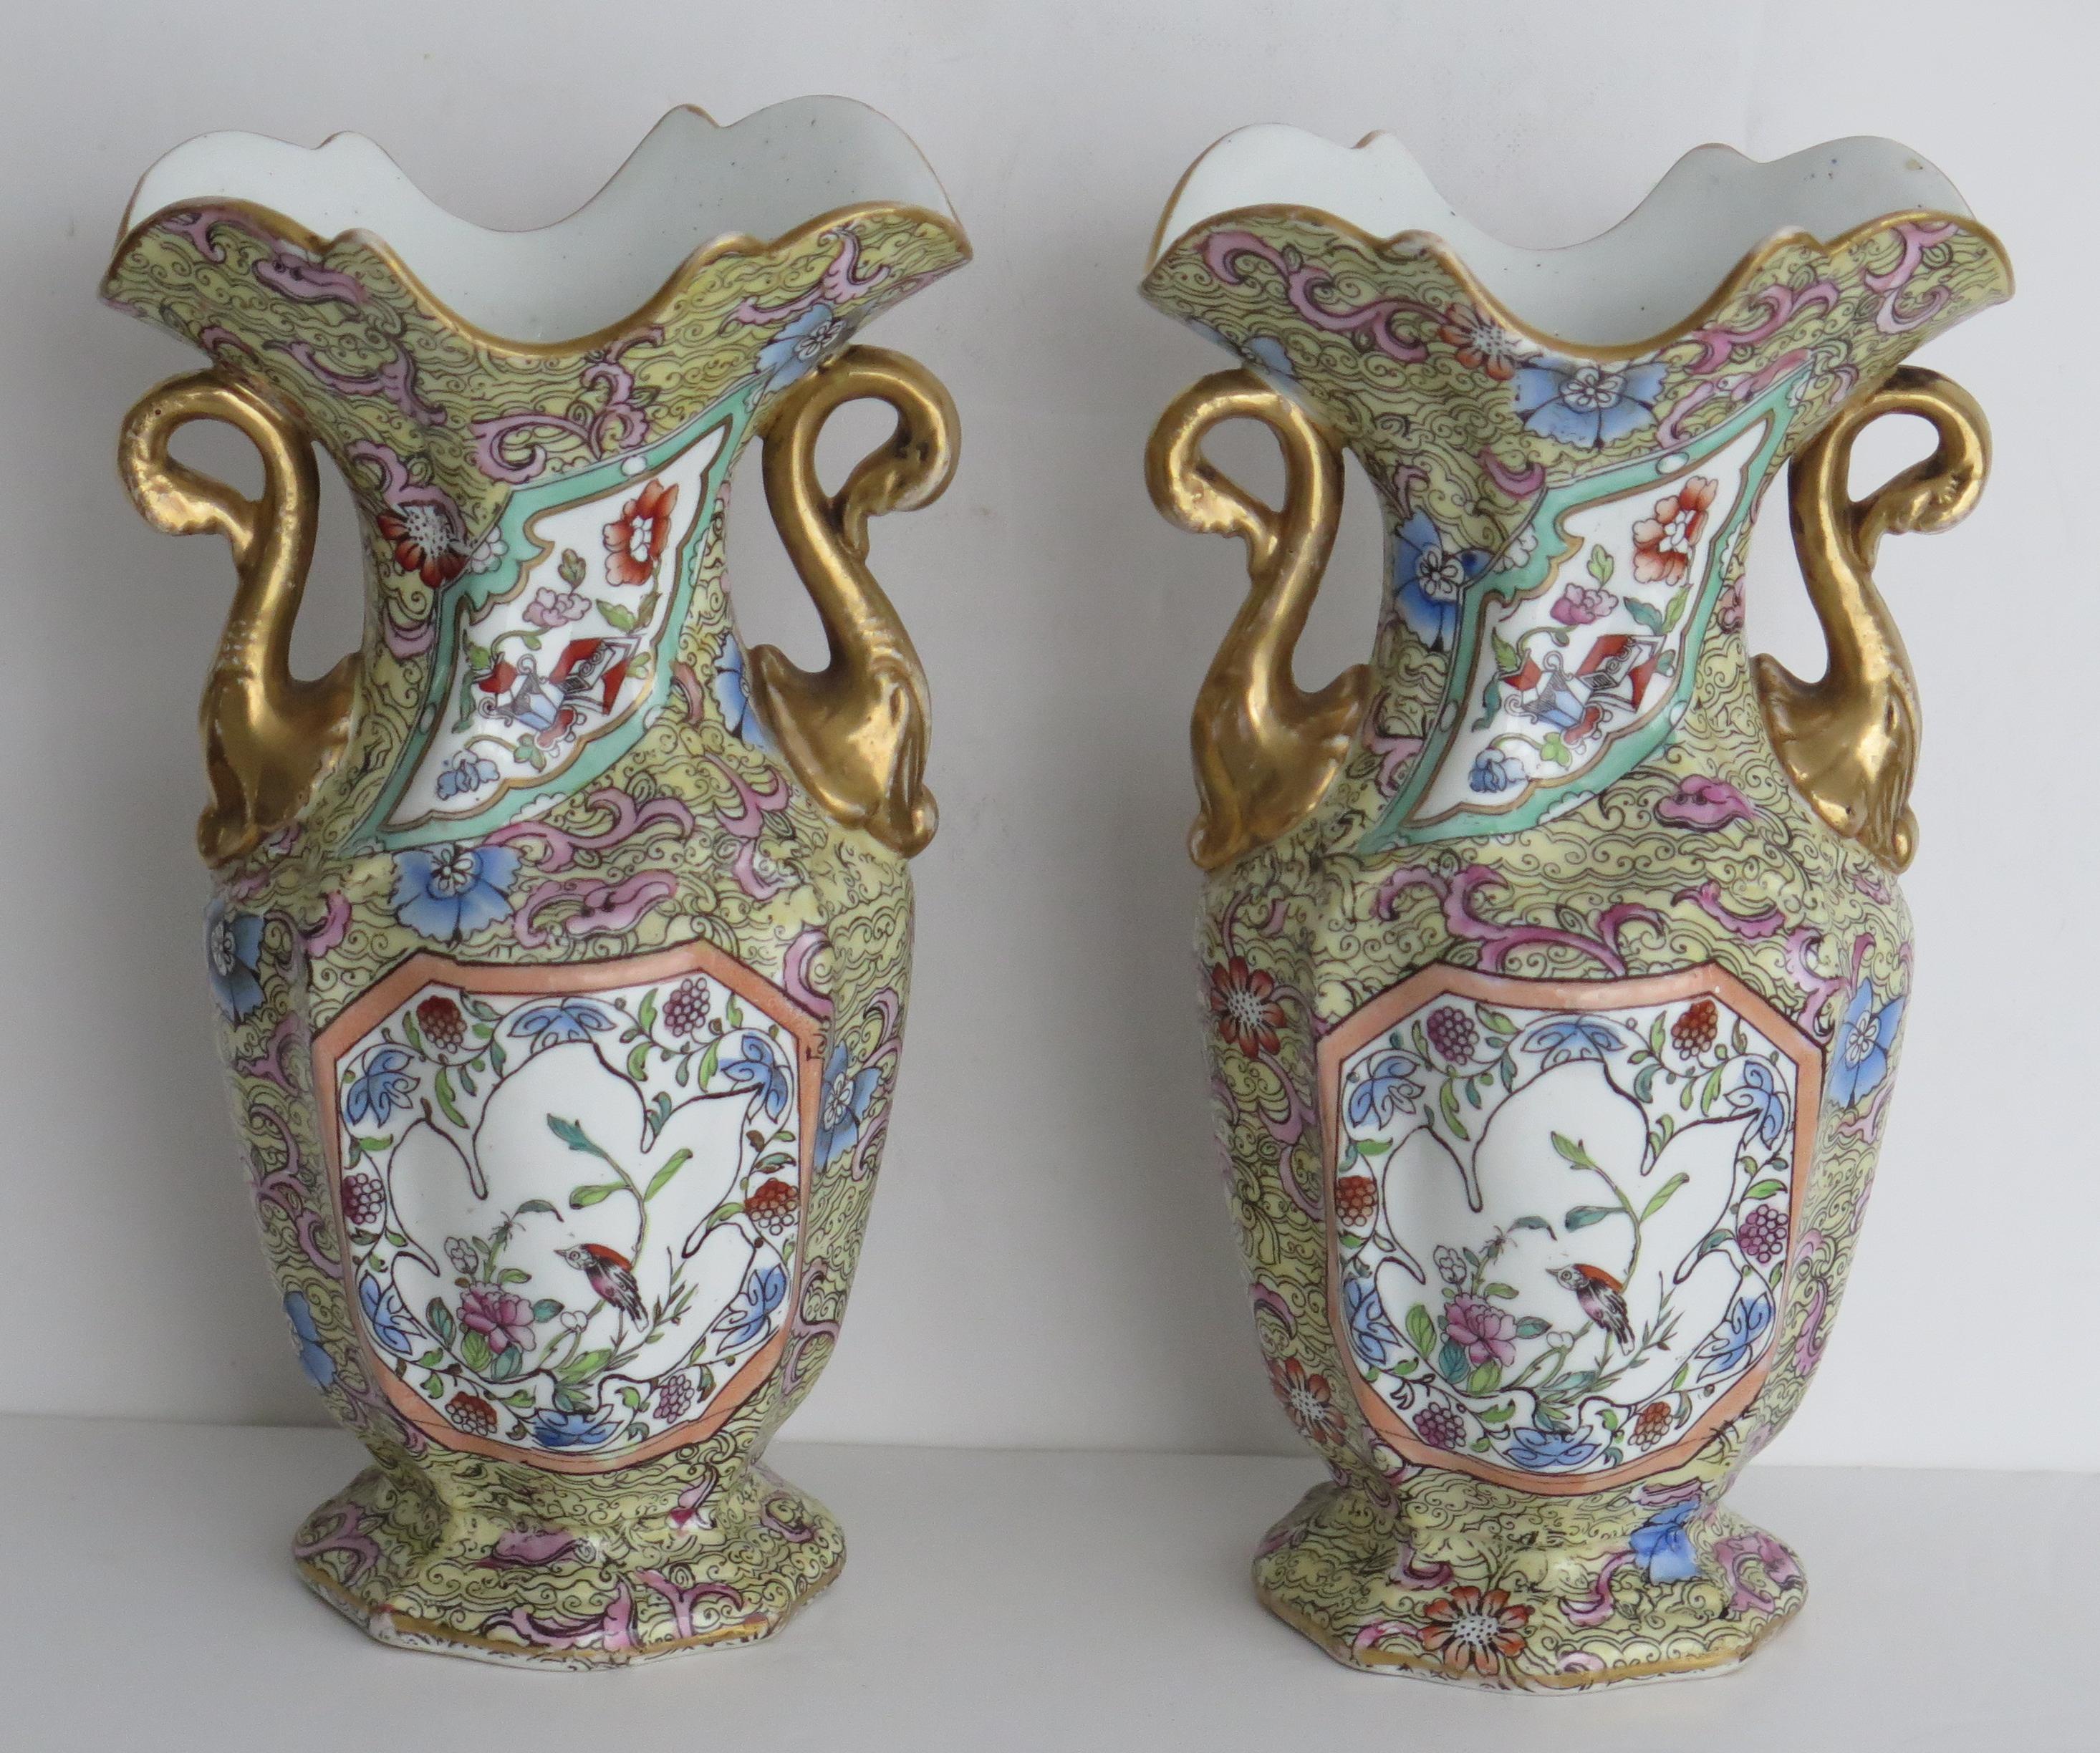 19th Century Pair of Mason's Ironstone Twin Handled Vases in Chinoiserie Pattern, circa 1820